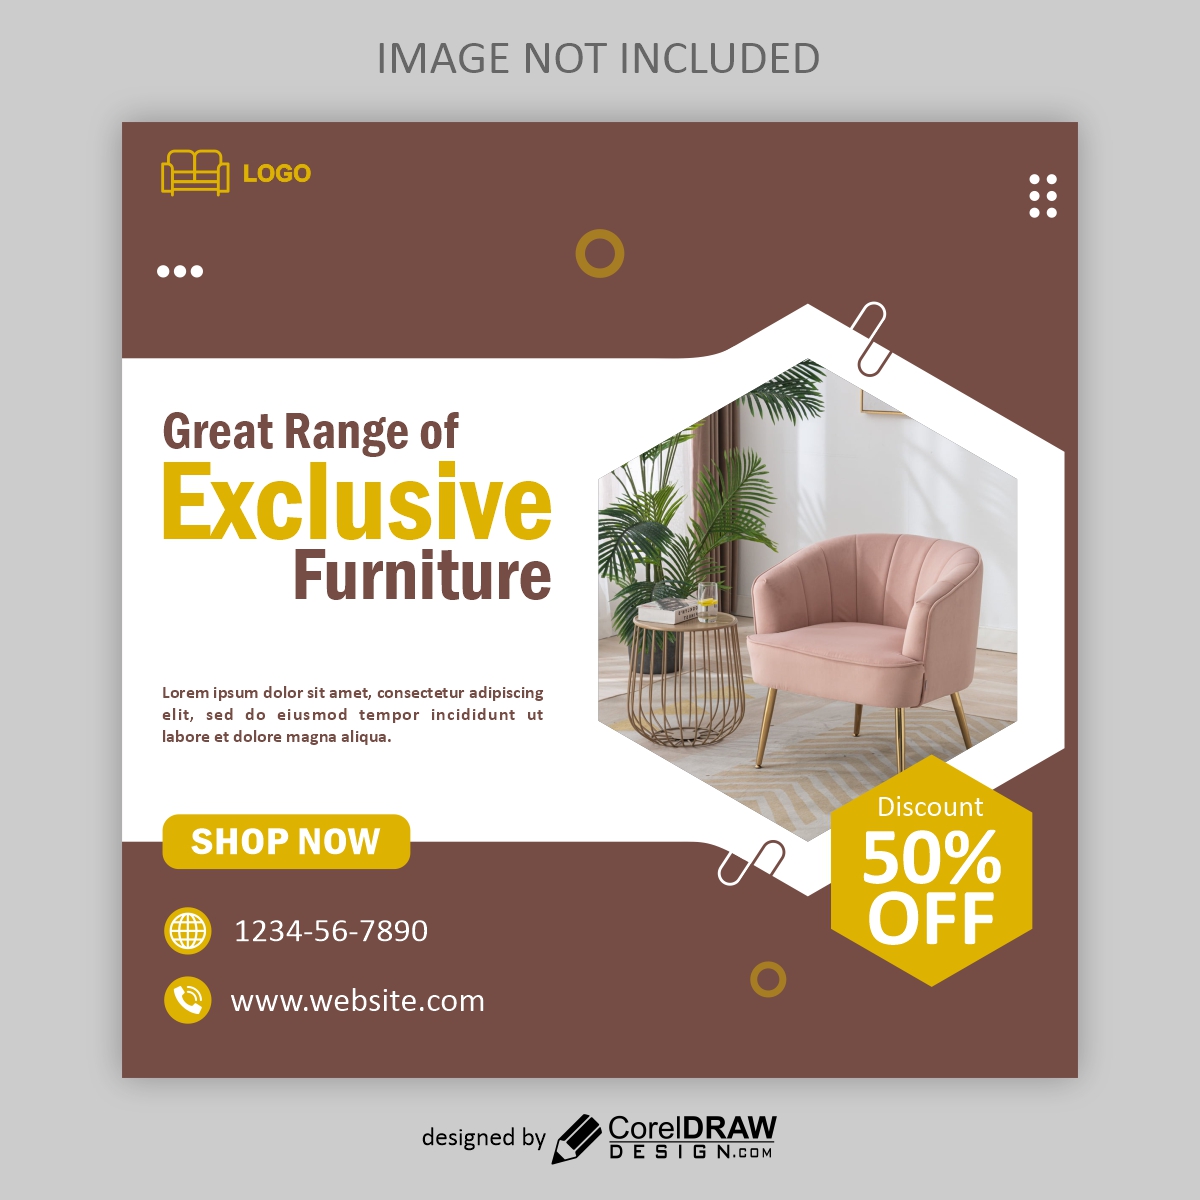 Furniture poster vector design download for free